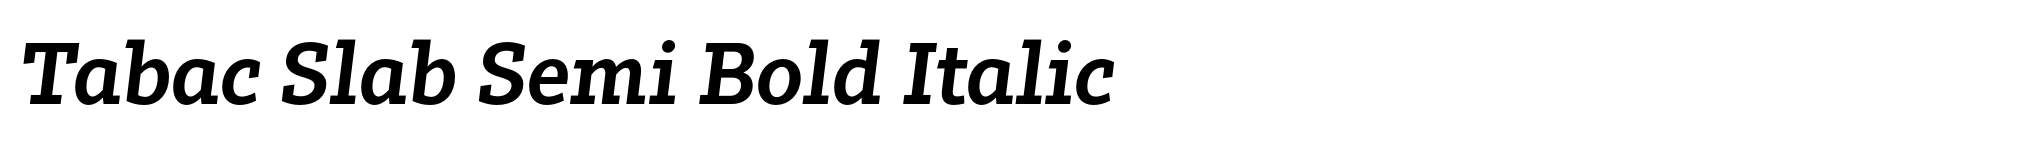 Tabac Slab Semi Bold Italic image